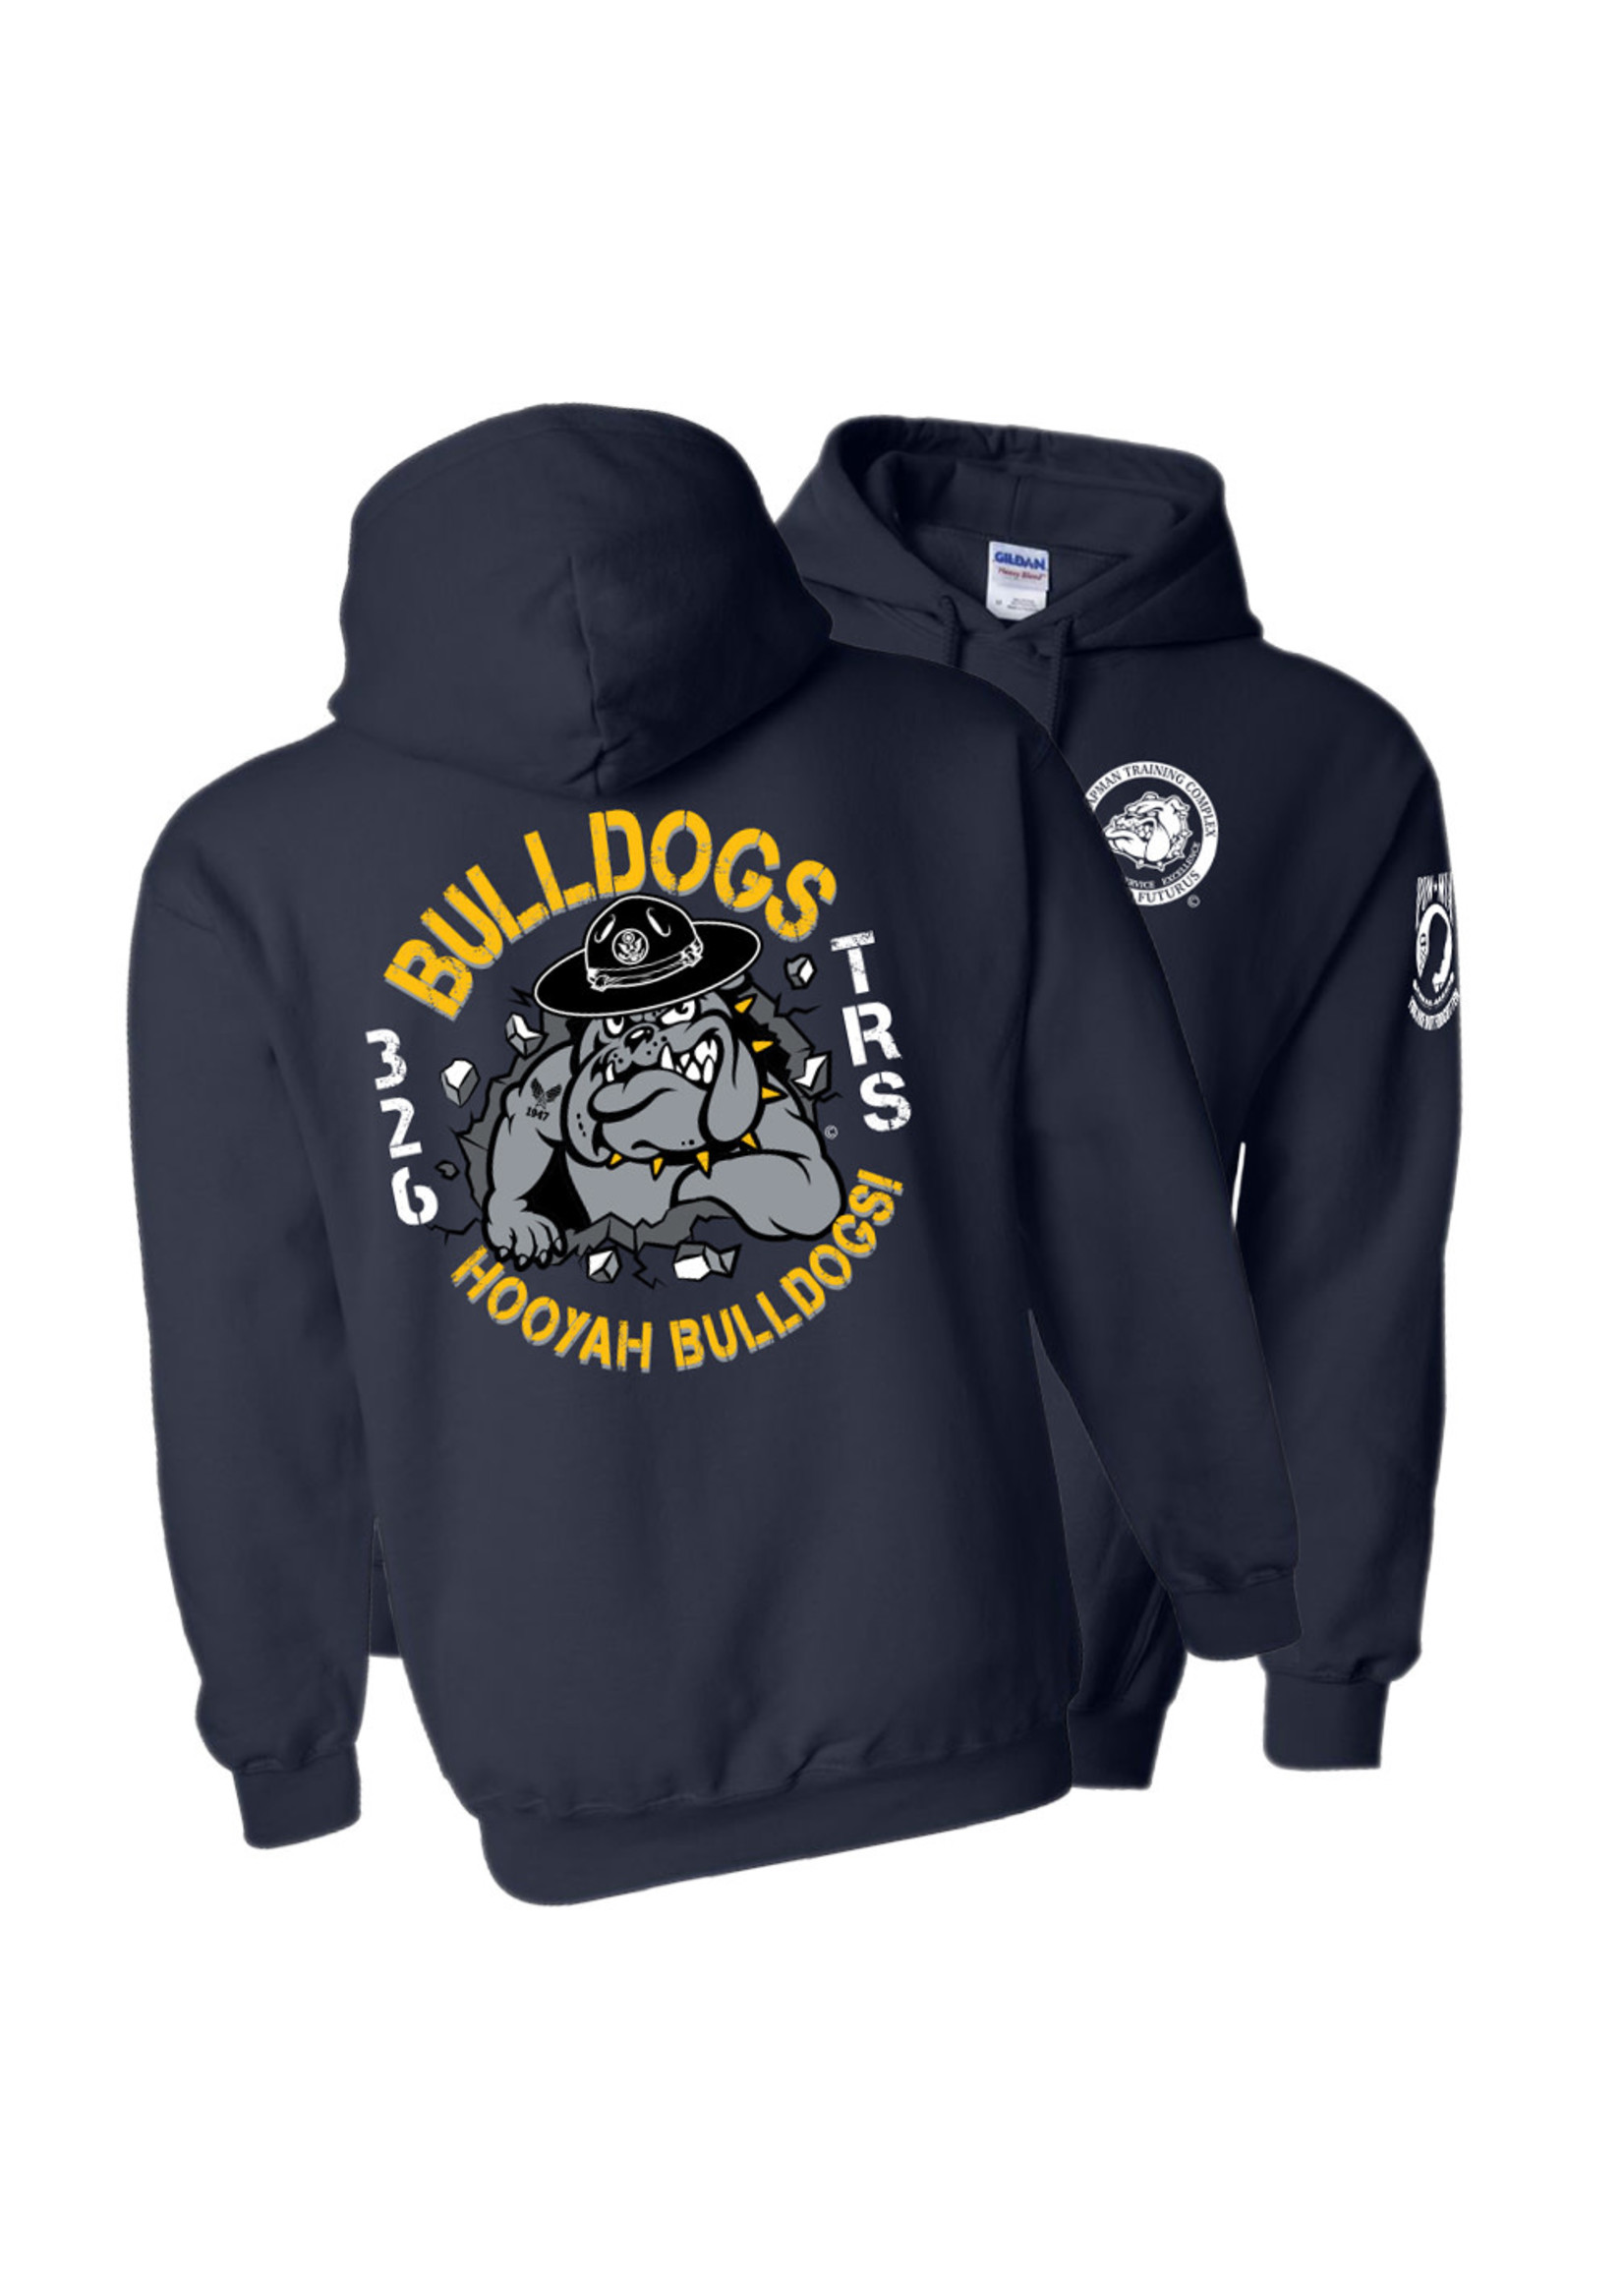 326th Bulldogs Cotton Hoodie